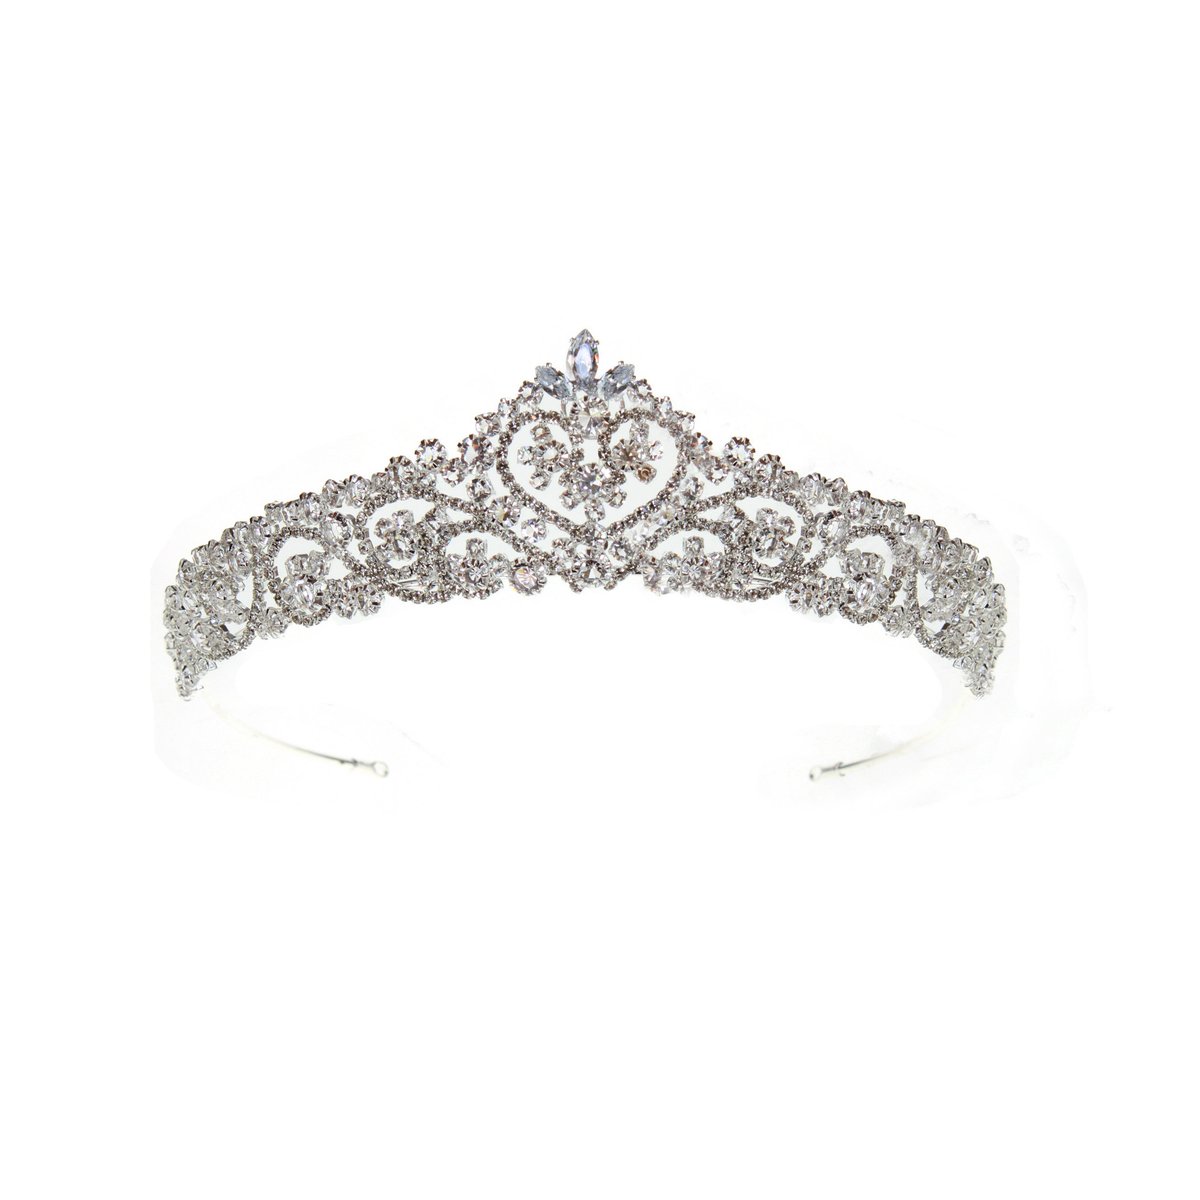 Cubic Zirconia Wedding Tiara | Stella #2022bride #bridalheadpiece
Buy here tiarasandco.co.uk/product-page/c…